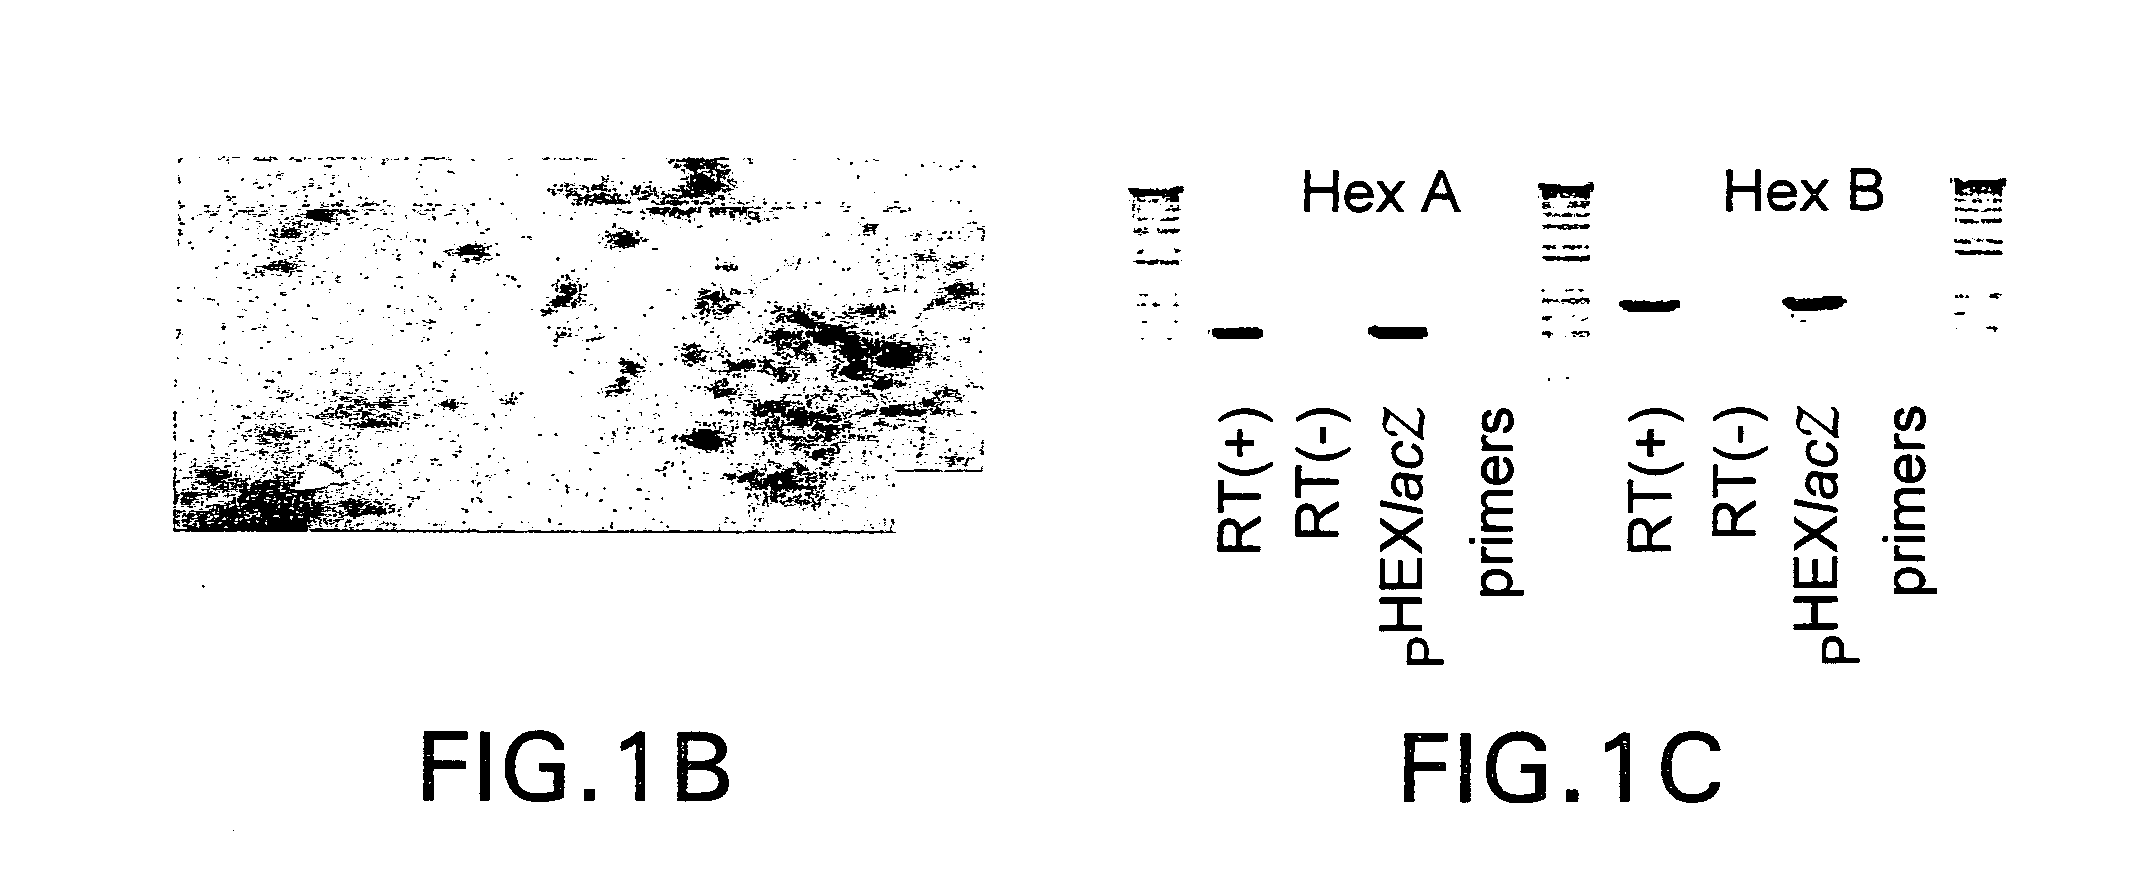 Vectors having both isoforms of beta-hexosaminidase